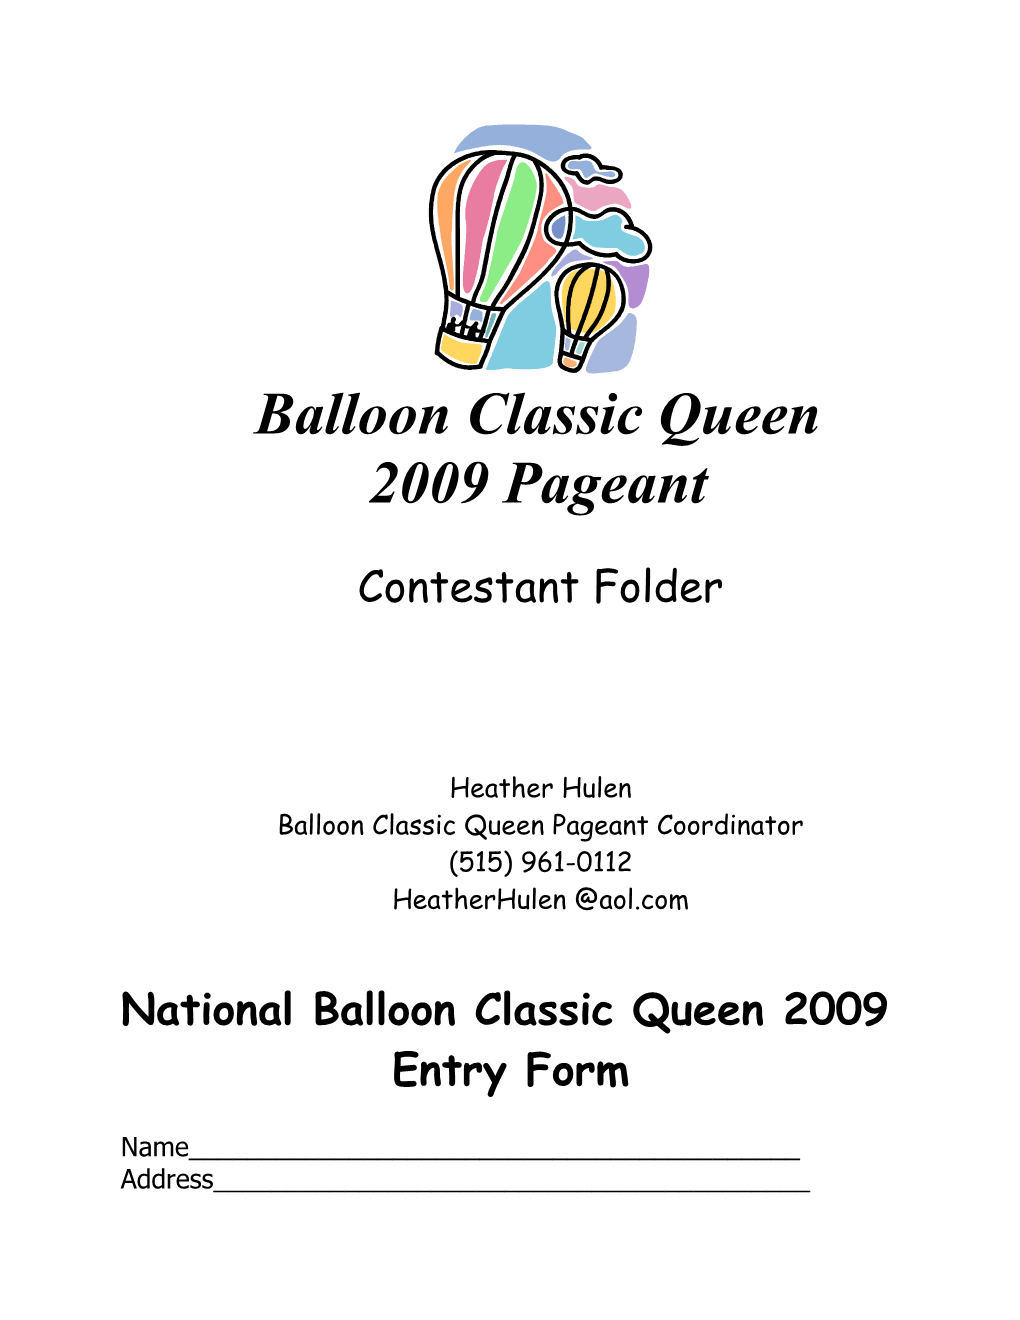 National Balloon Classic Queen 2007